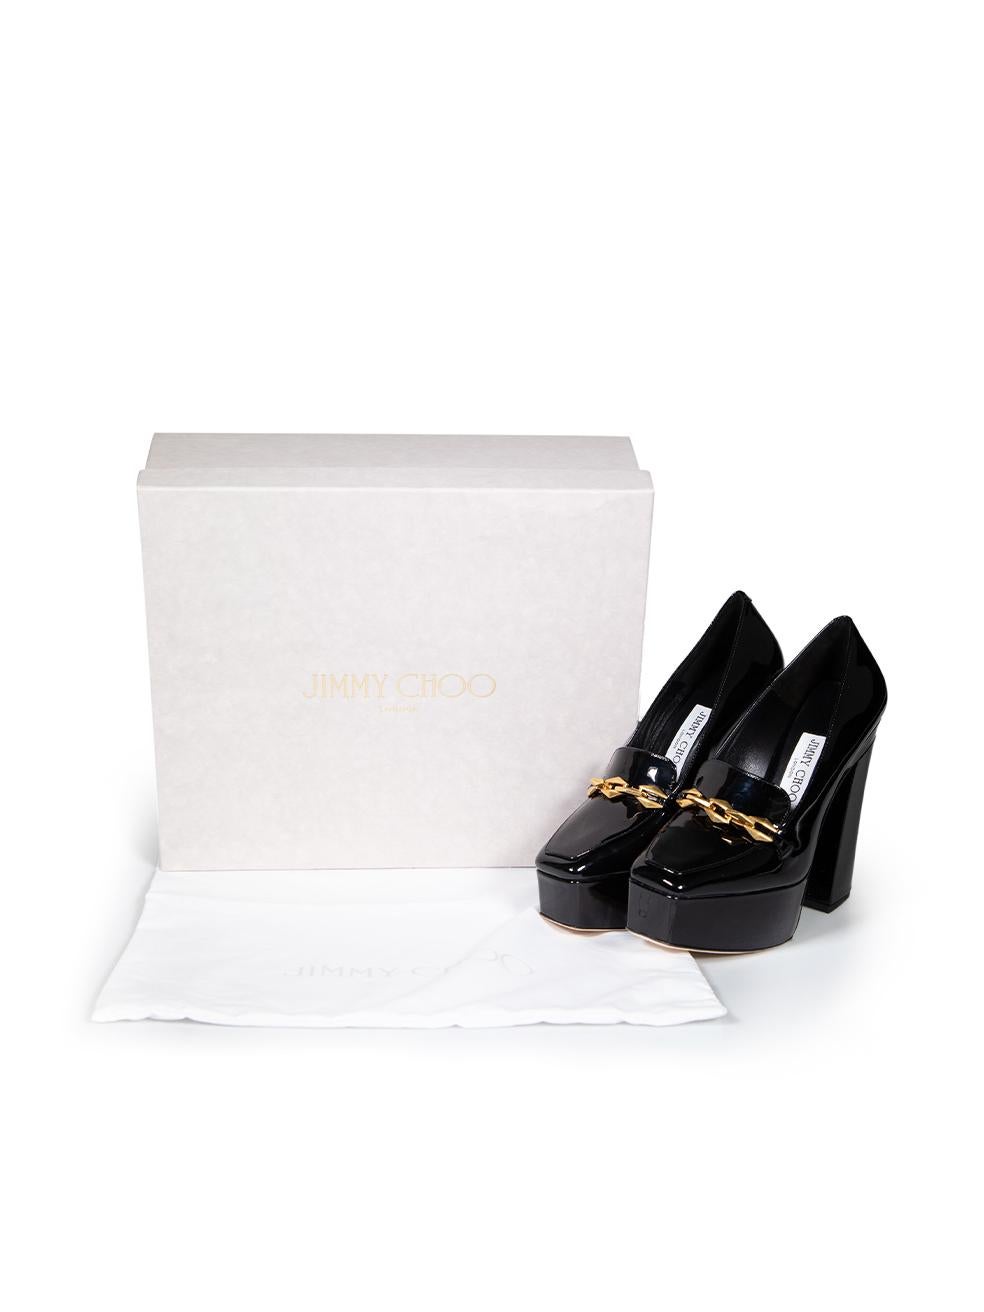 Jimmy Choo Black Patent Leather Diamond Tilda 140 Heels Size IT 36.5 1